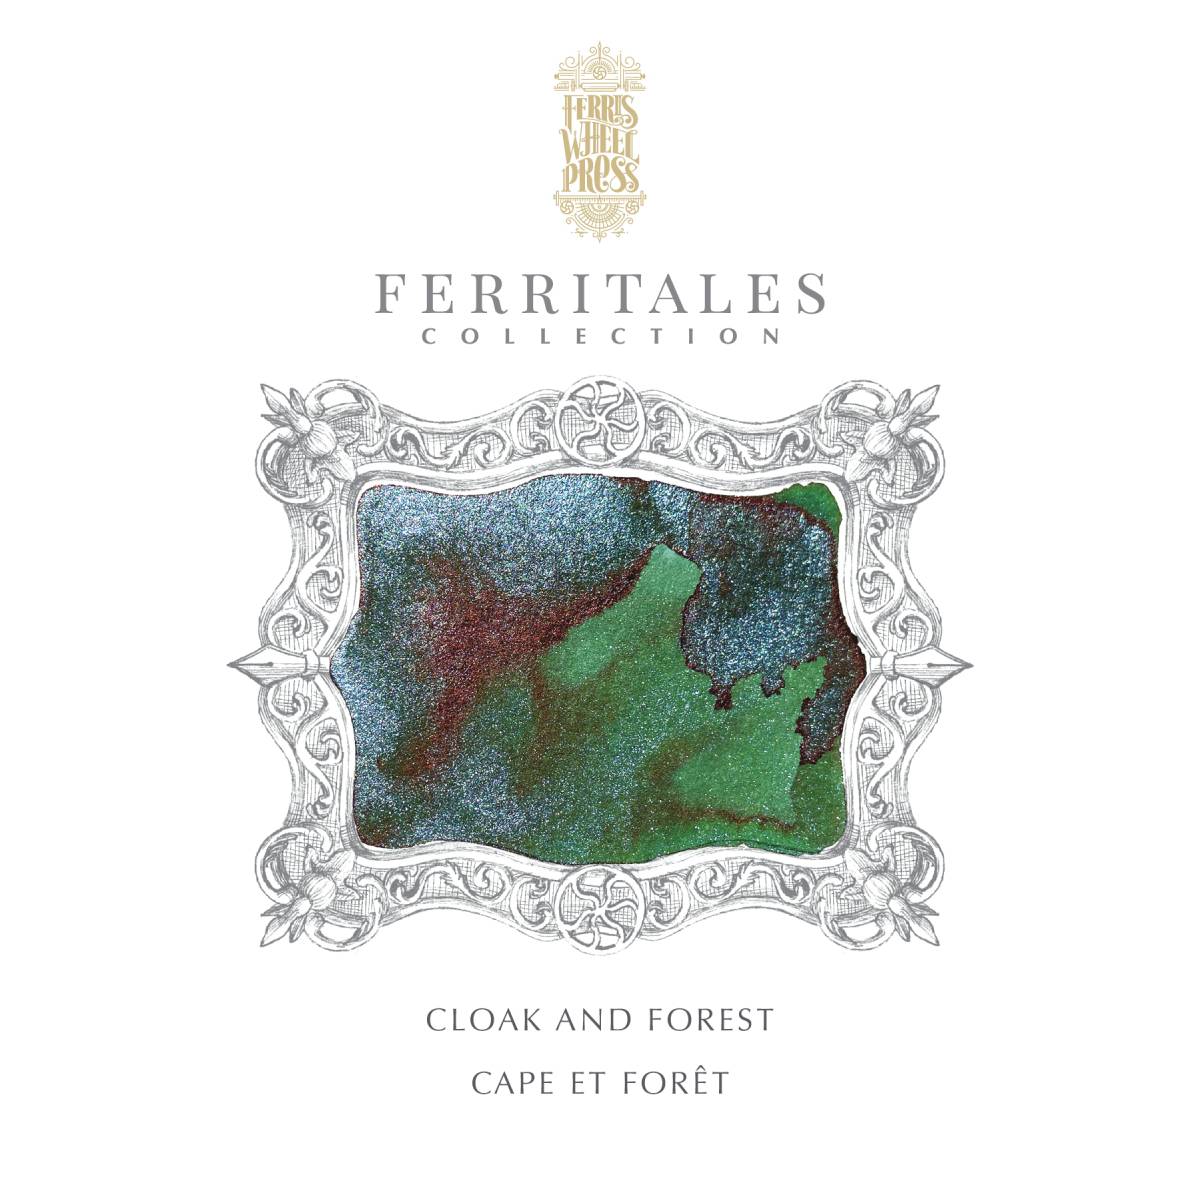 Ferris Wheel Press - Ferritales Ink - Cloak and Forest